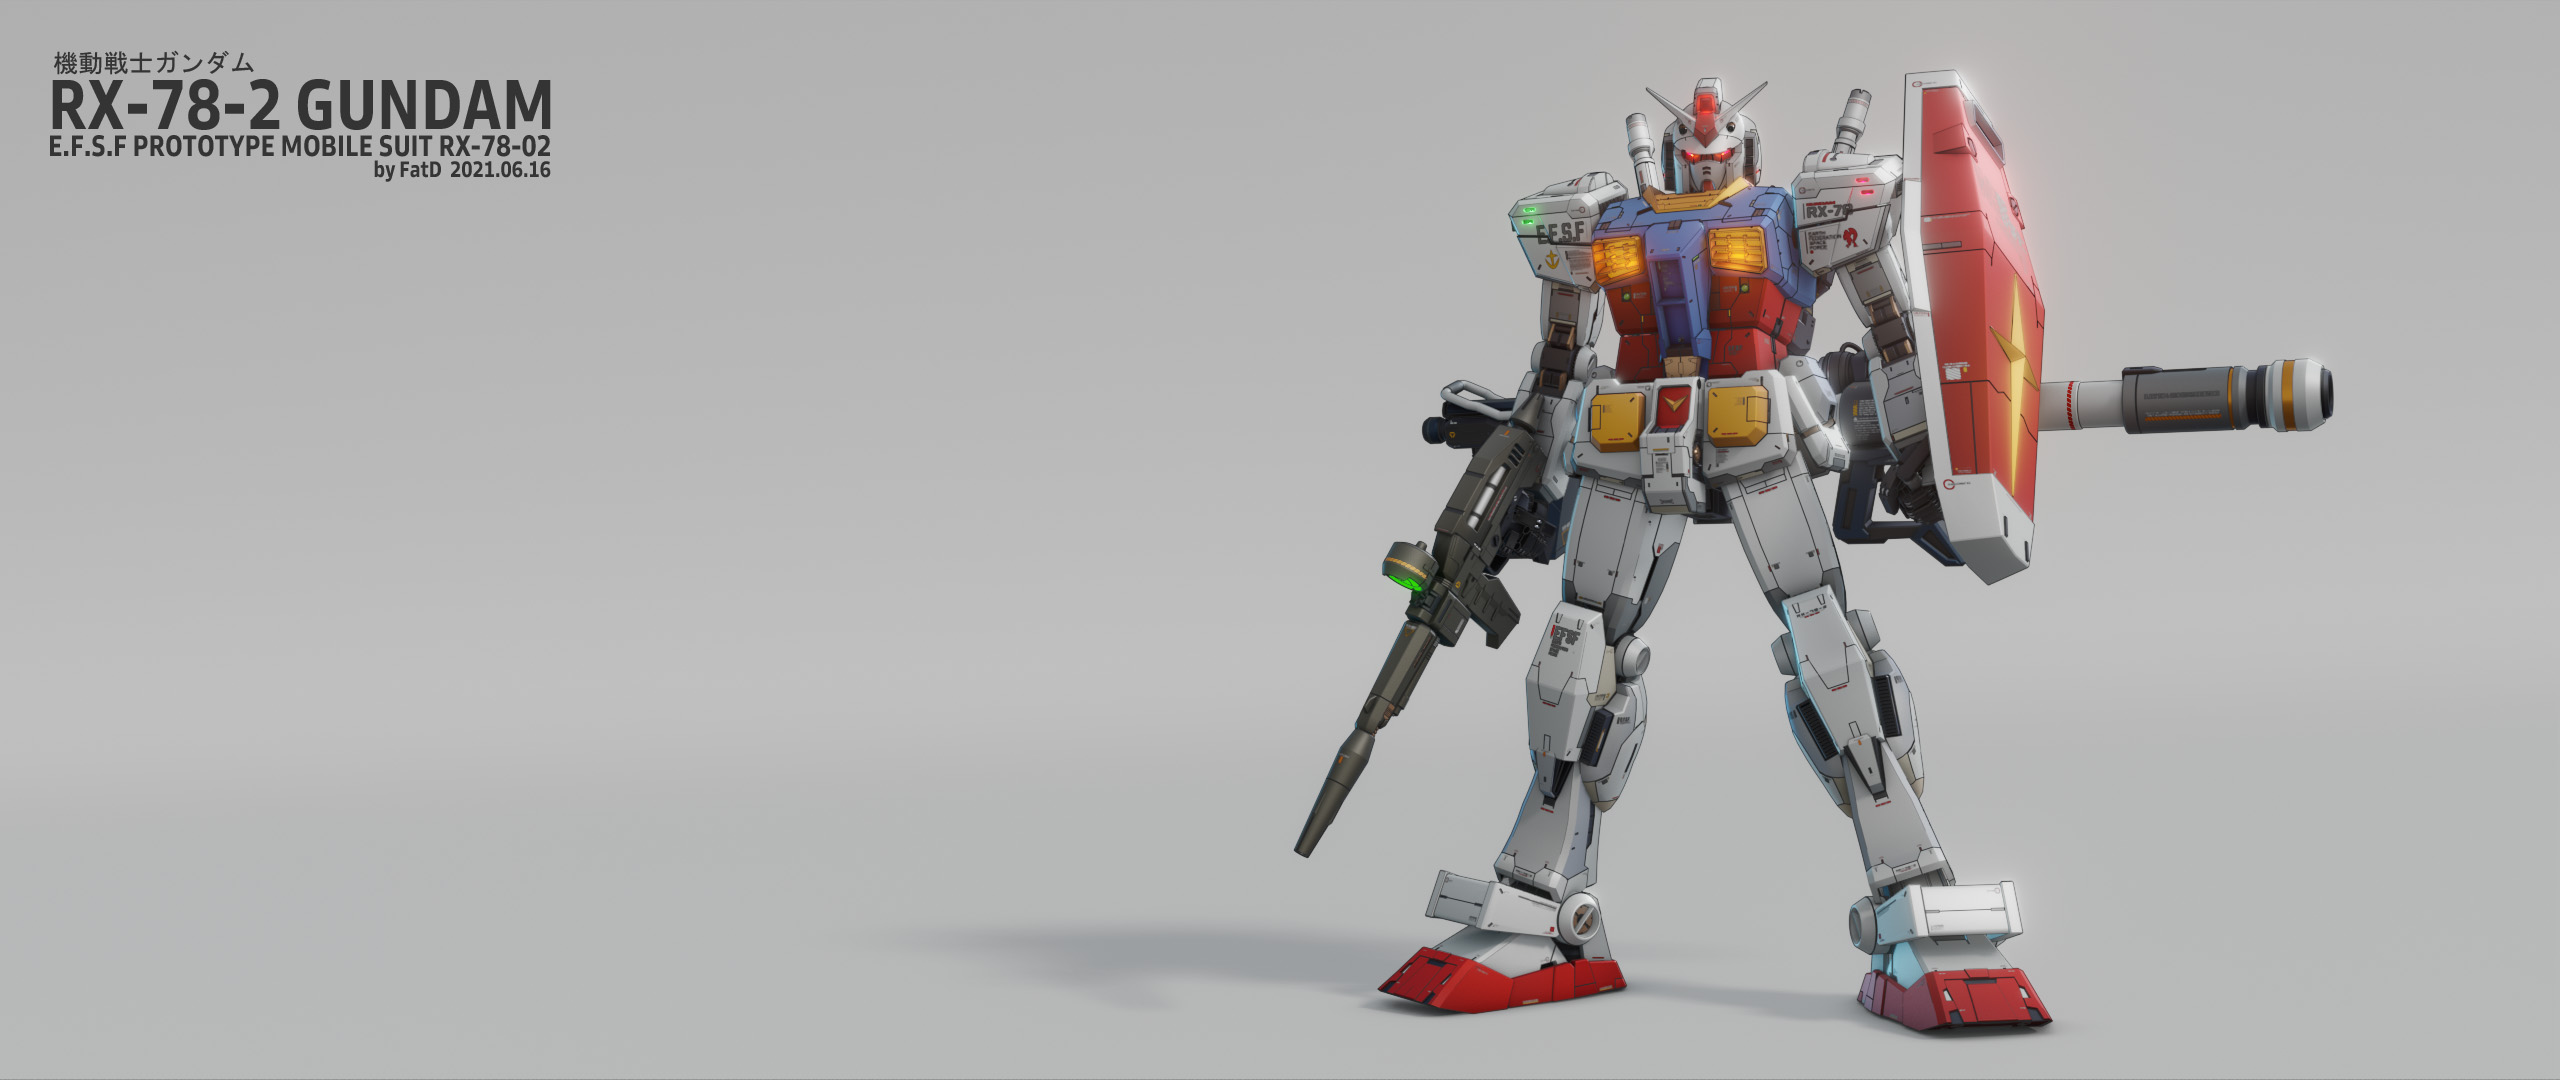 RX-78-2 Gundam Pose 01 Blender 2.93 LTS EEVEE 2560x1080 128 Samples 41.20 s...